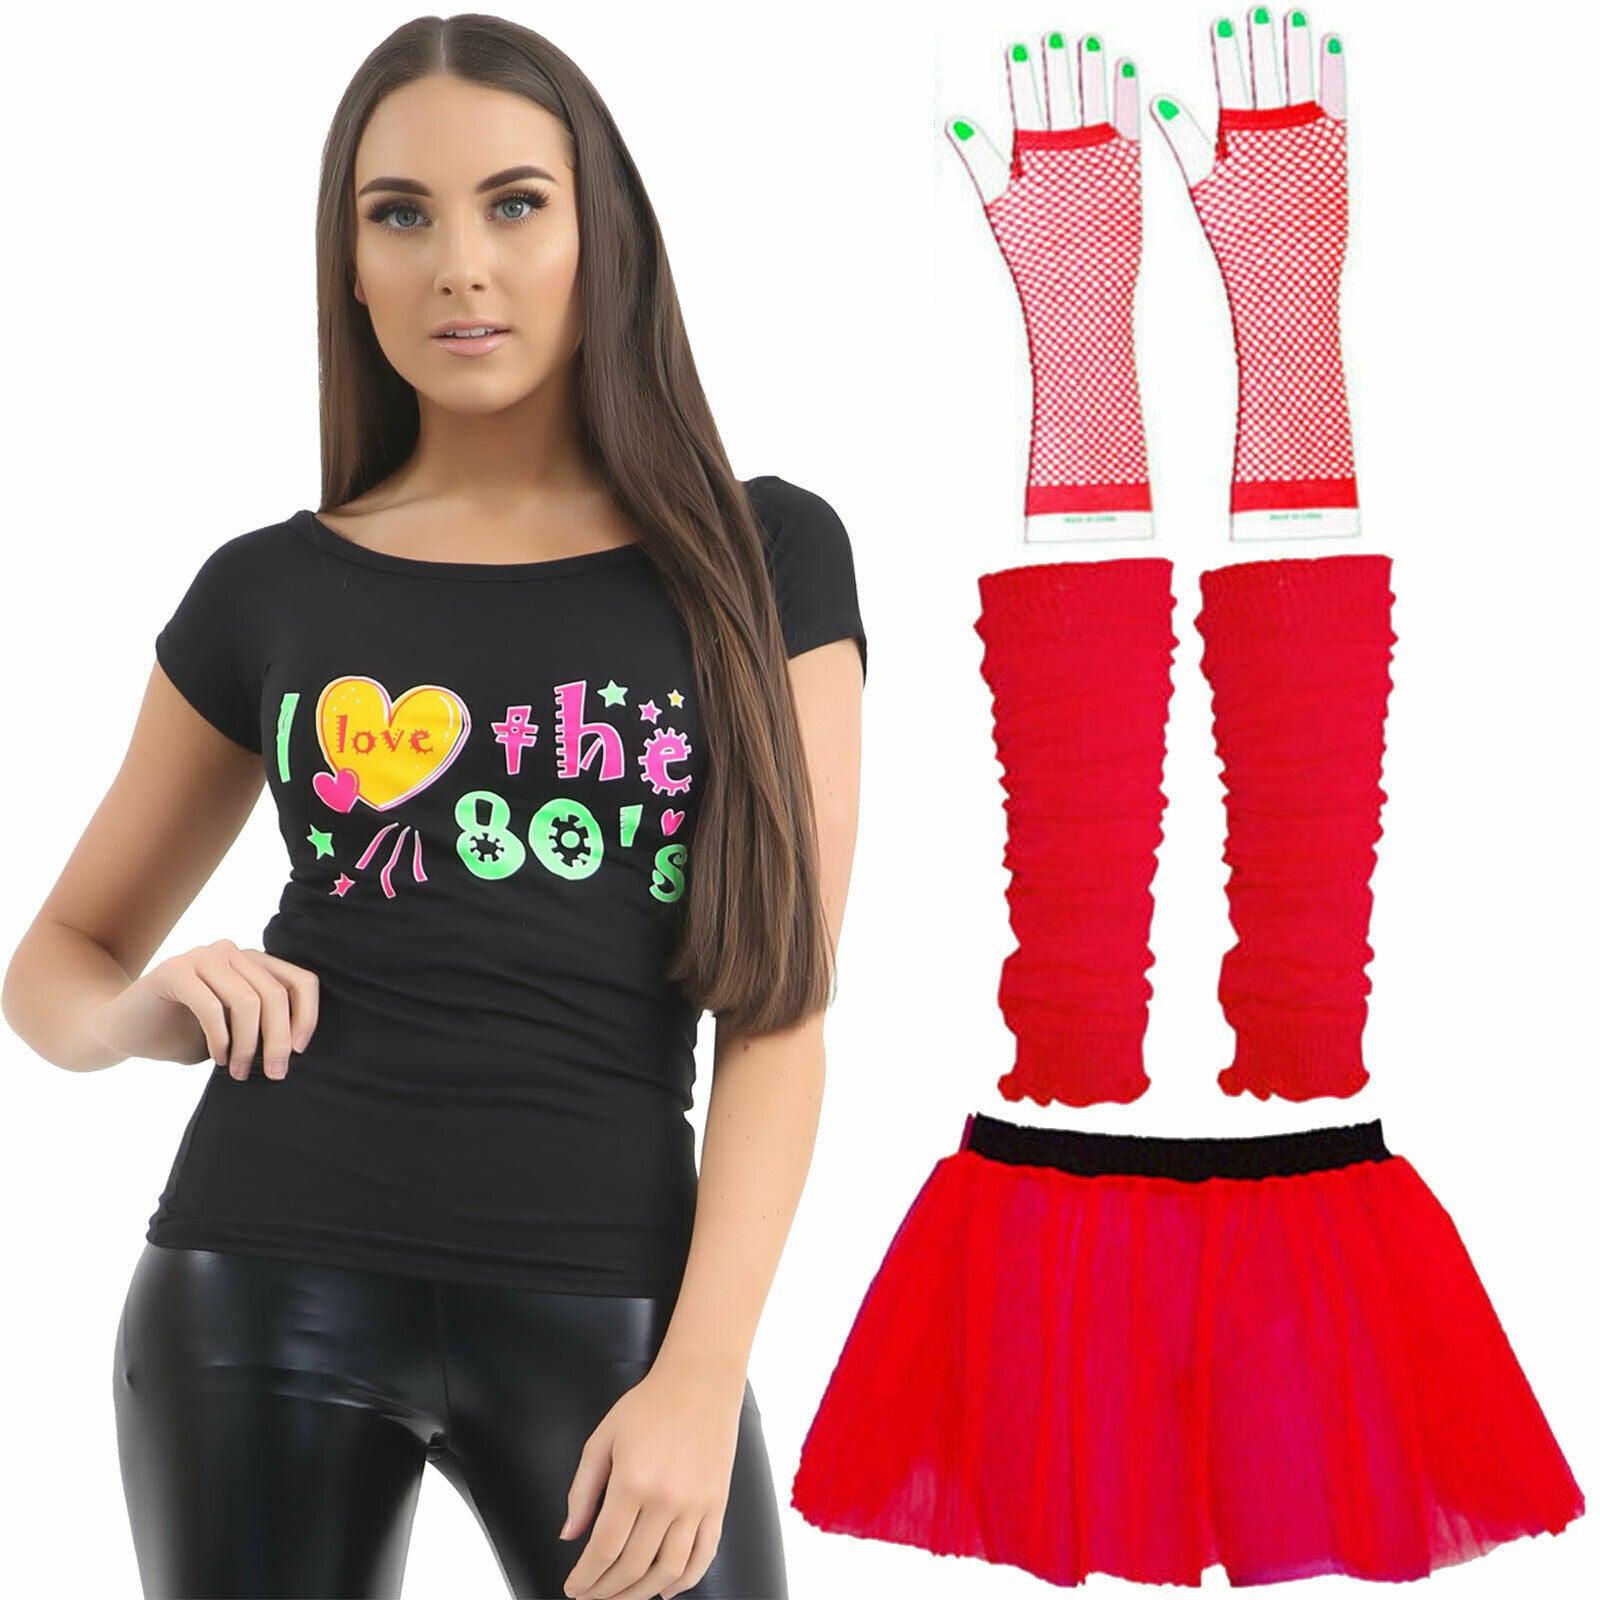 Ladies Red Tutu T-shirt Gloves Leg Warmers 80’s Hen Night Neon Festival Costume - Labreeze